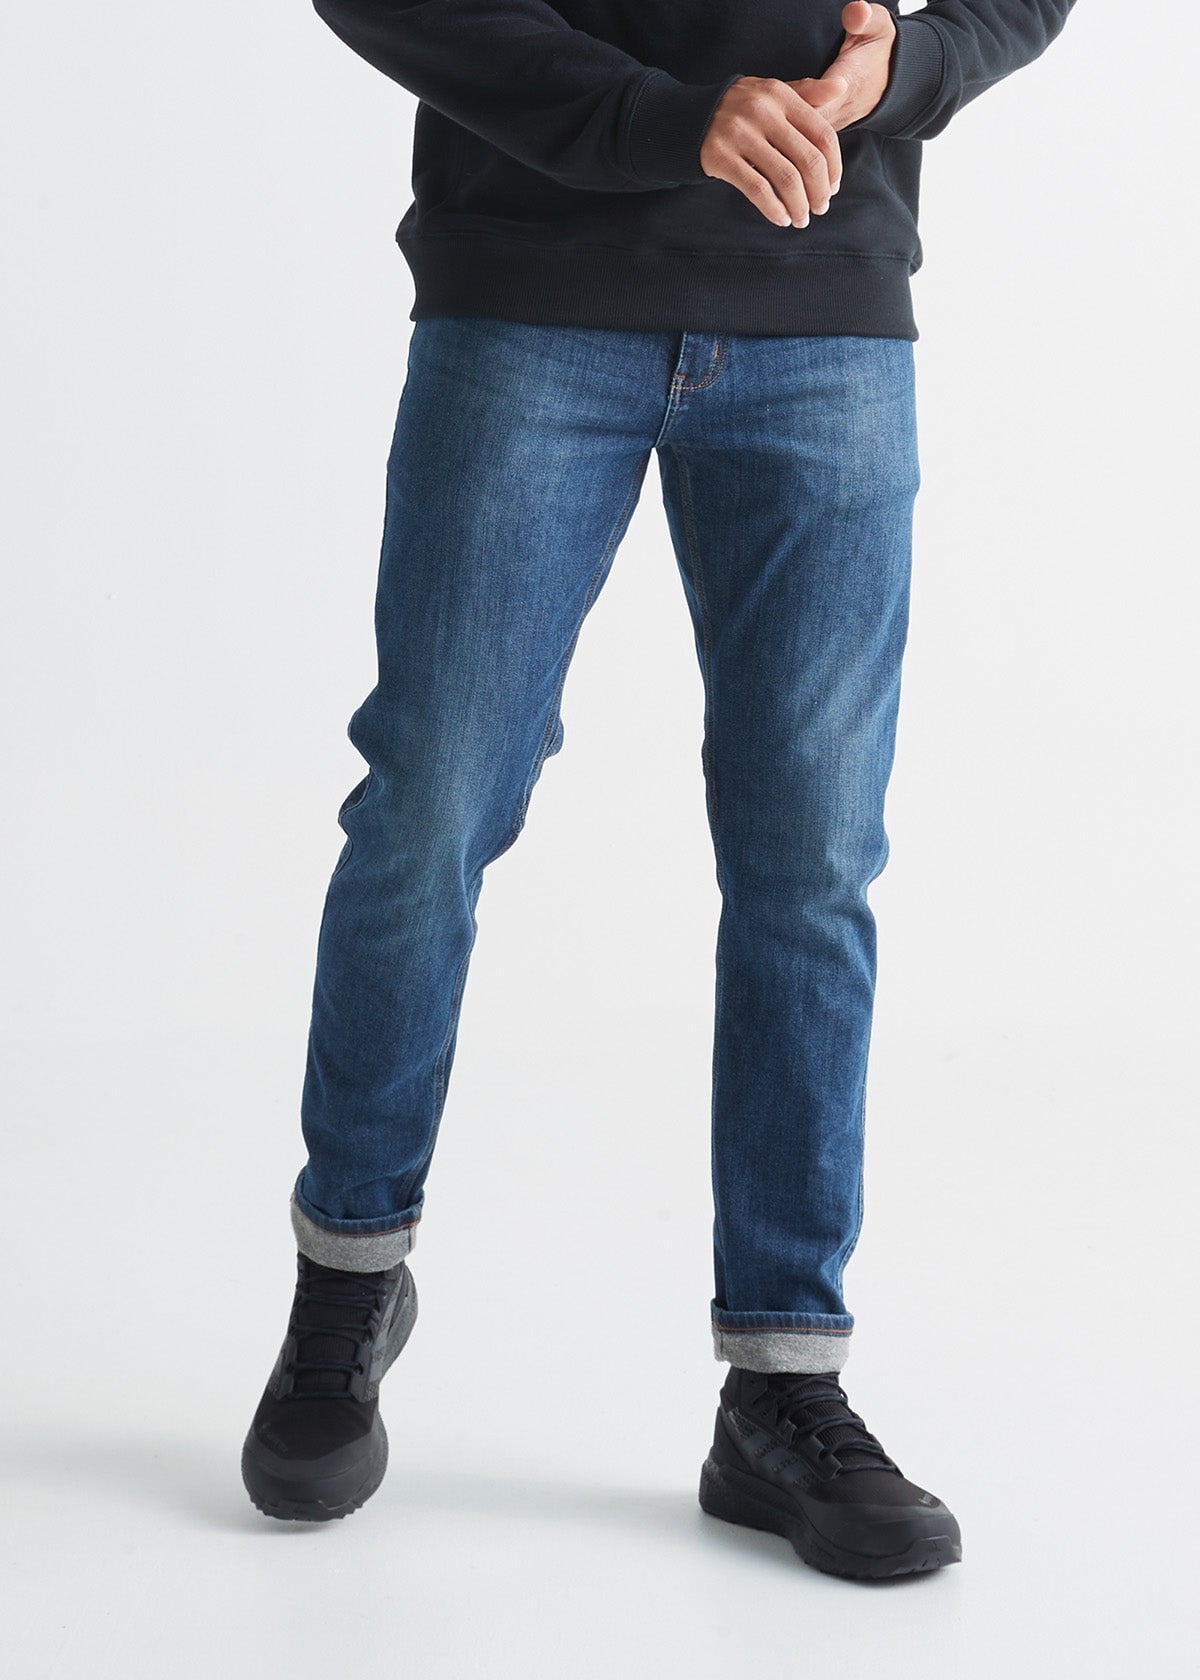 Men's Slim Fit Jeans & Pants - DUER – Tagged jeans